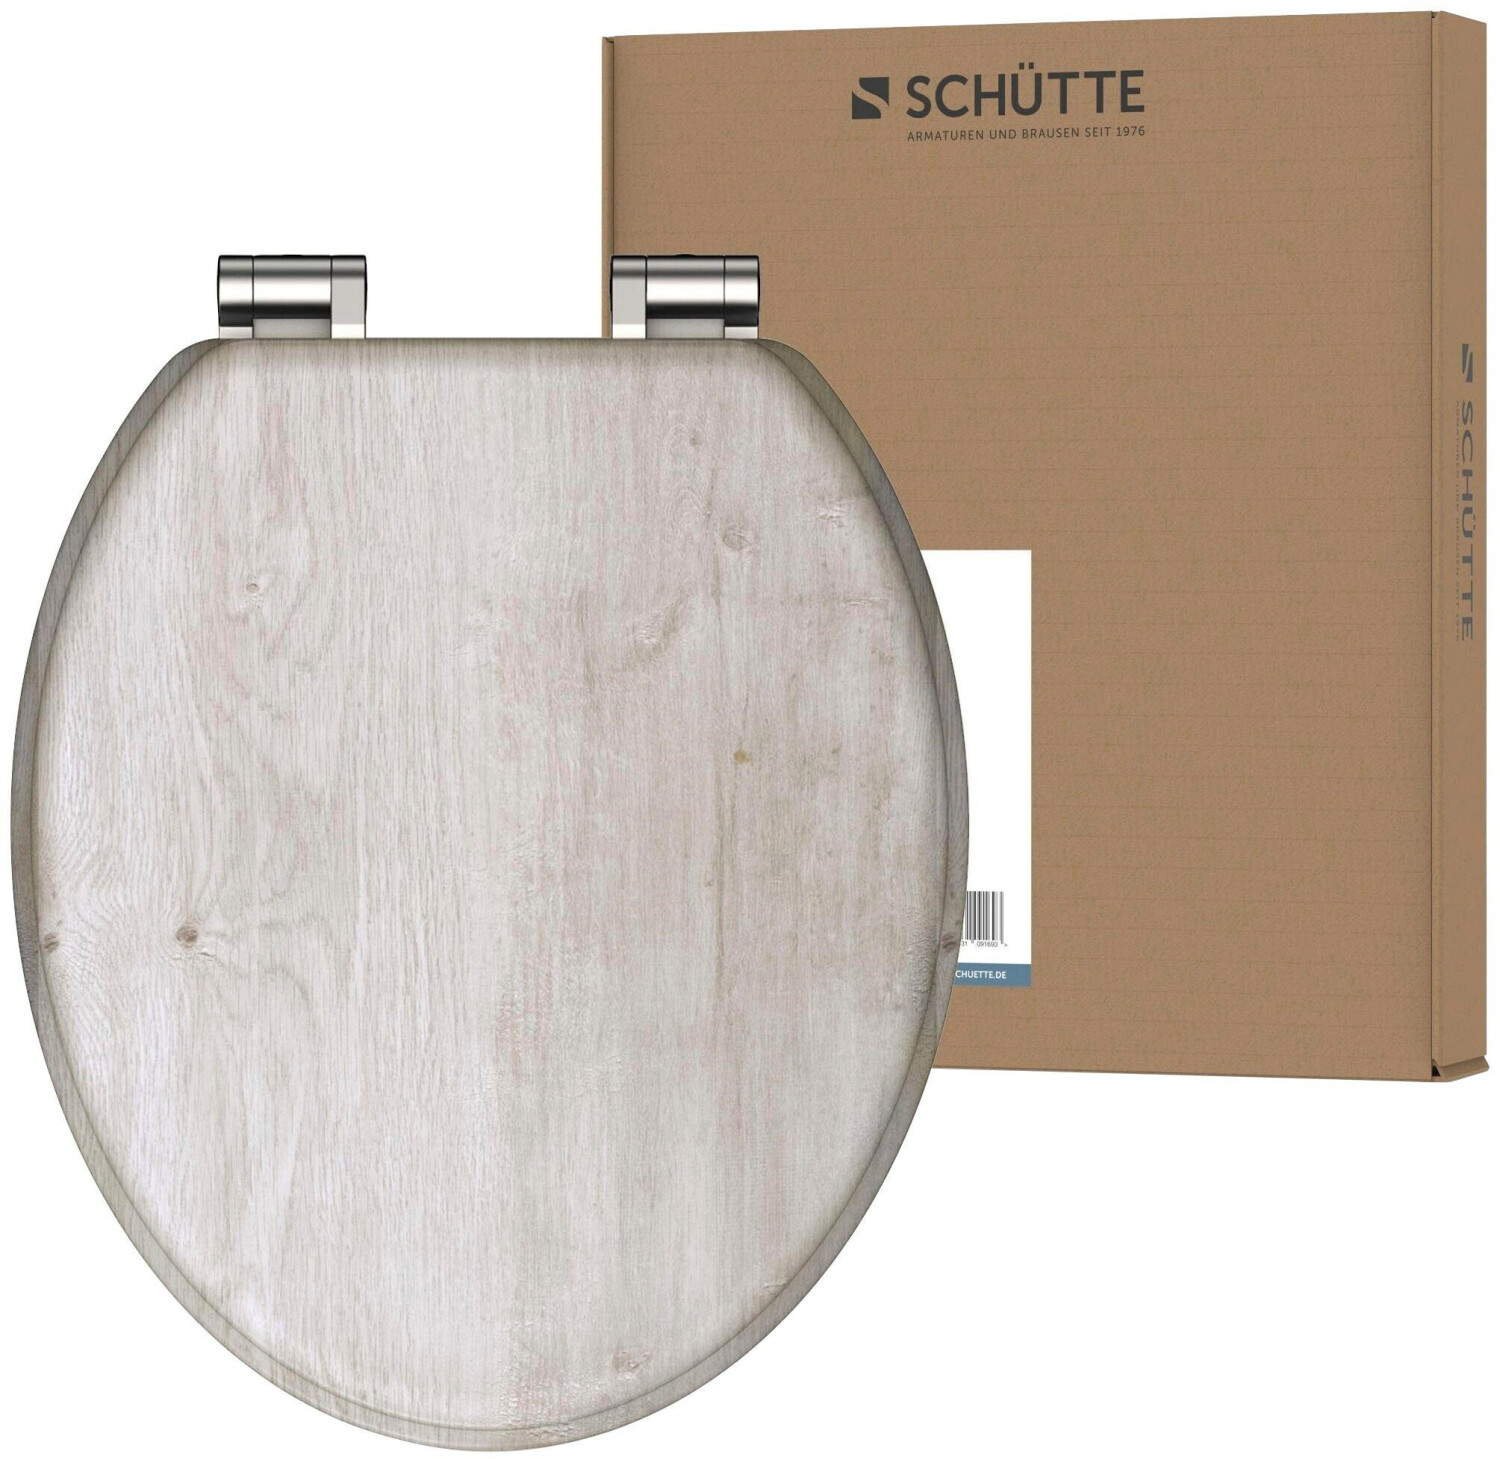 Products - Schütte